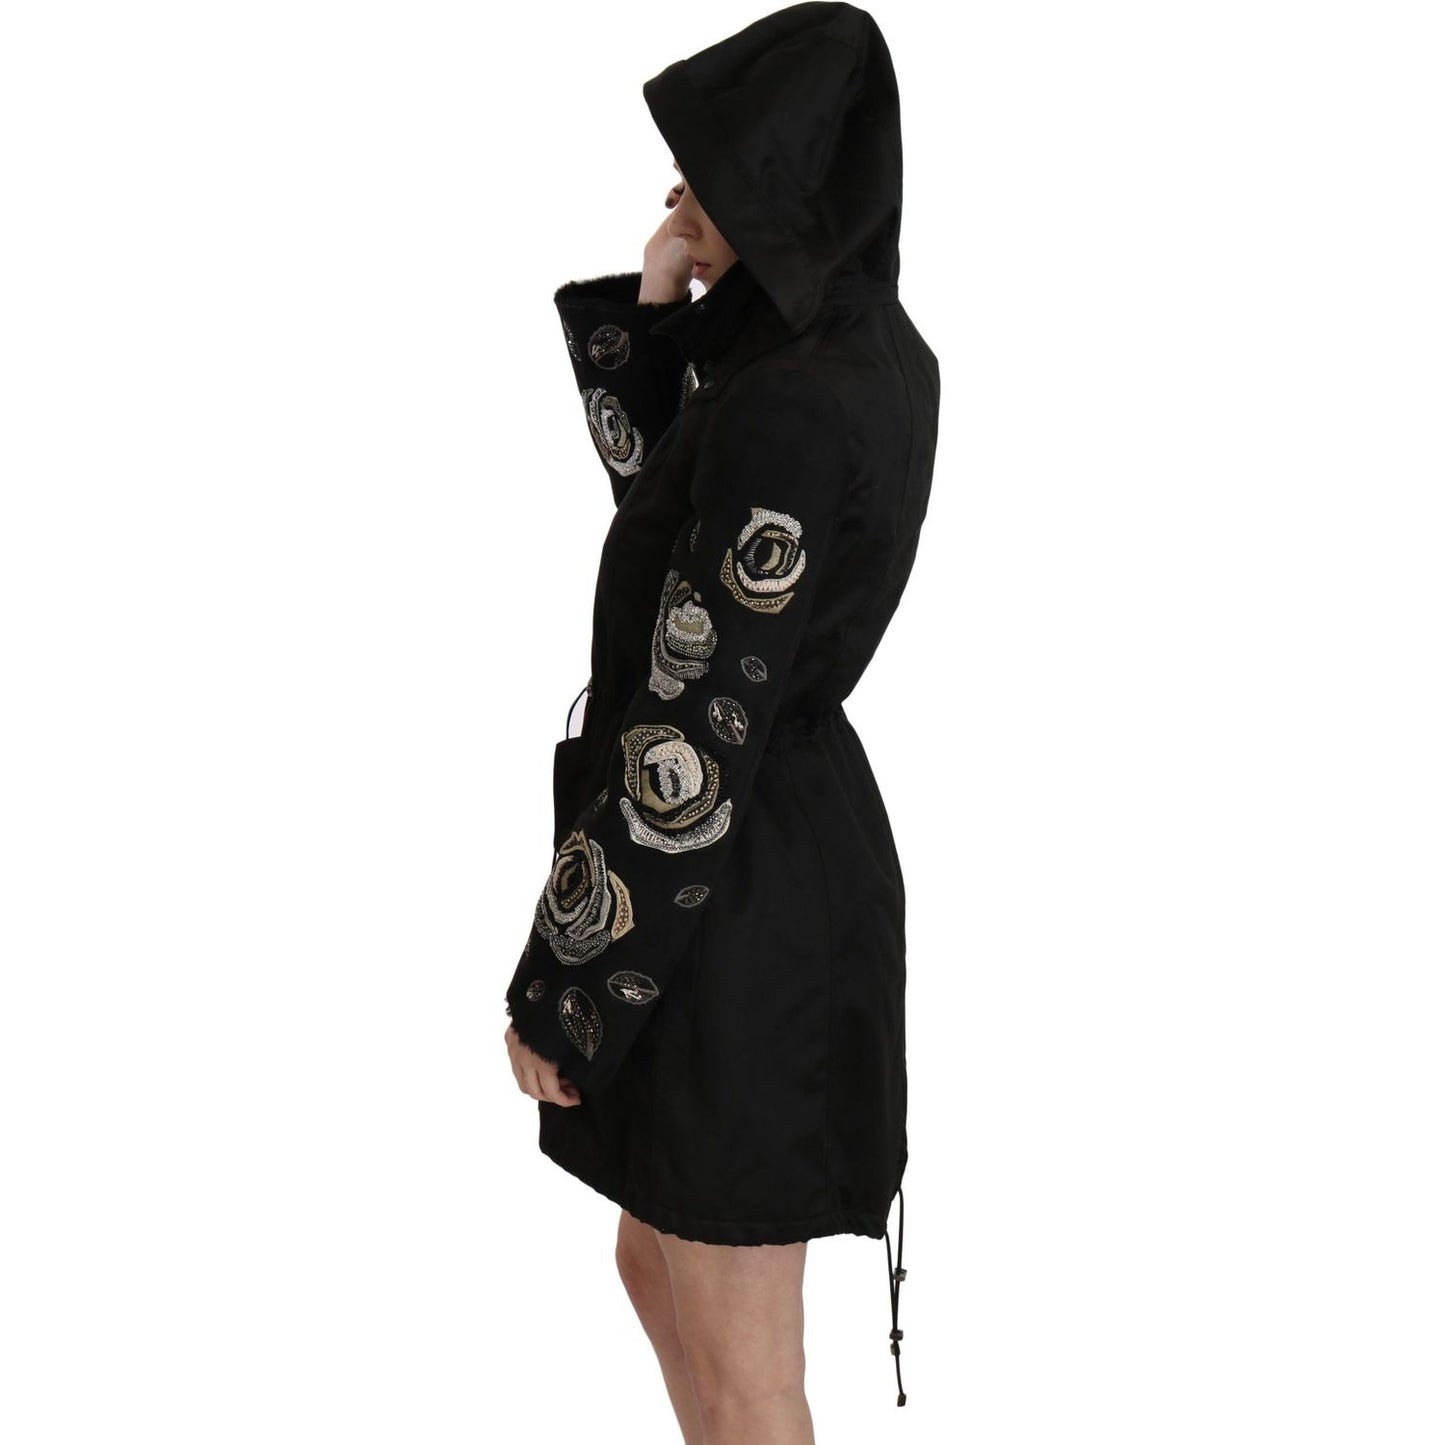 John Richmond Elegant Black Beaded Parka Jacket for Women floral-sequined-beaded-hooded-jacket-coat Coats & Jackets IMG_1407-1-scaled-48e77cdb-085.jpg